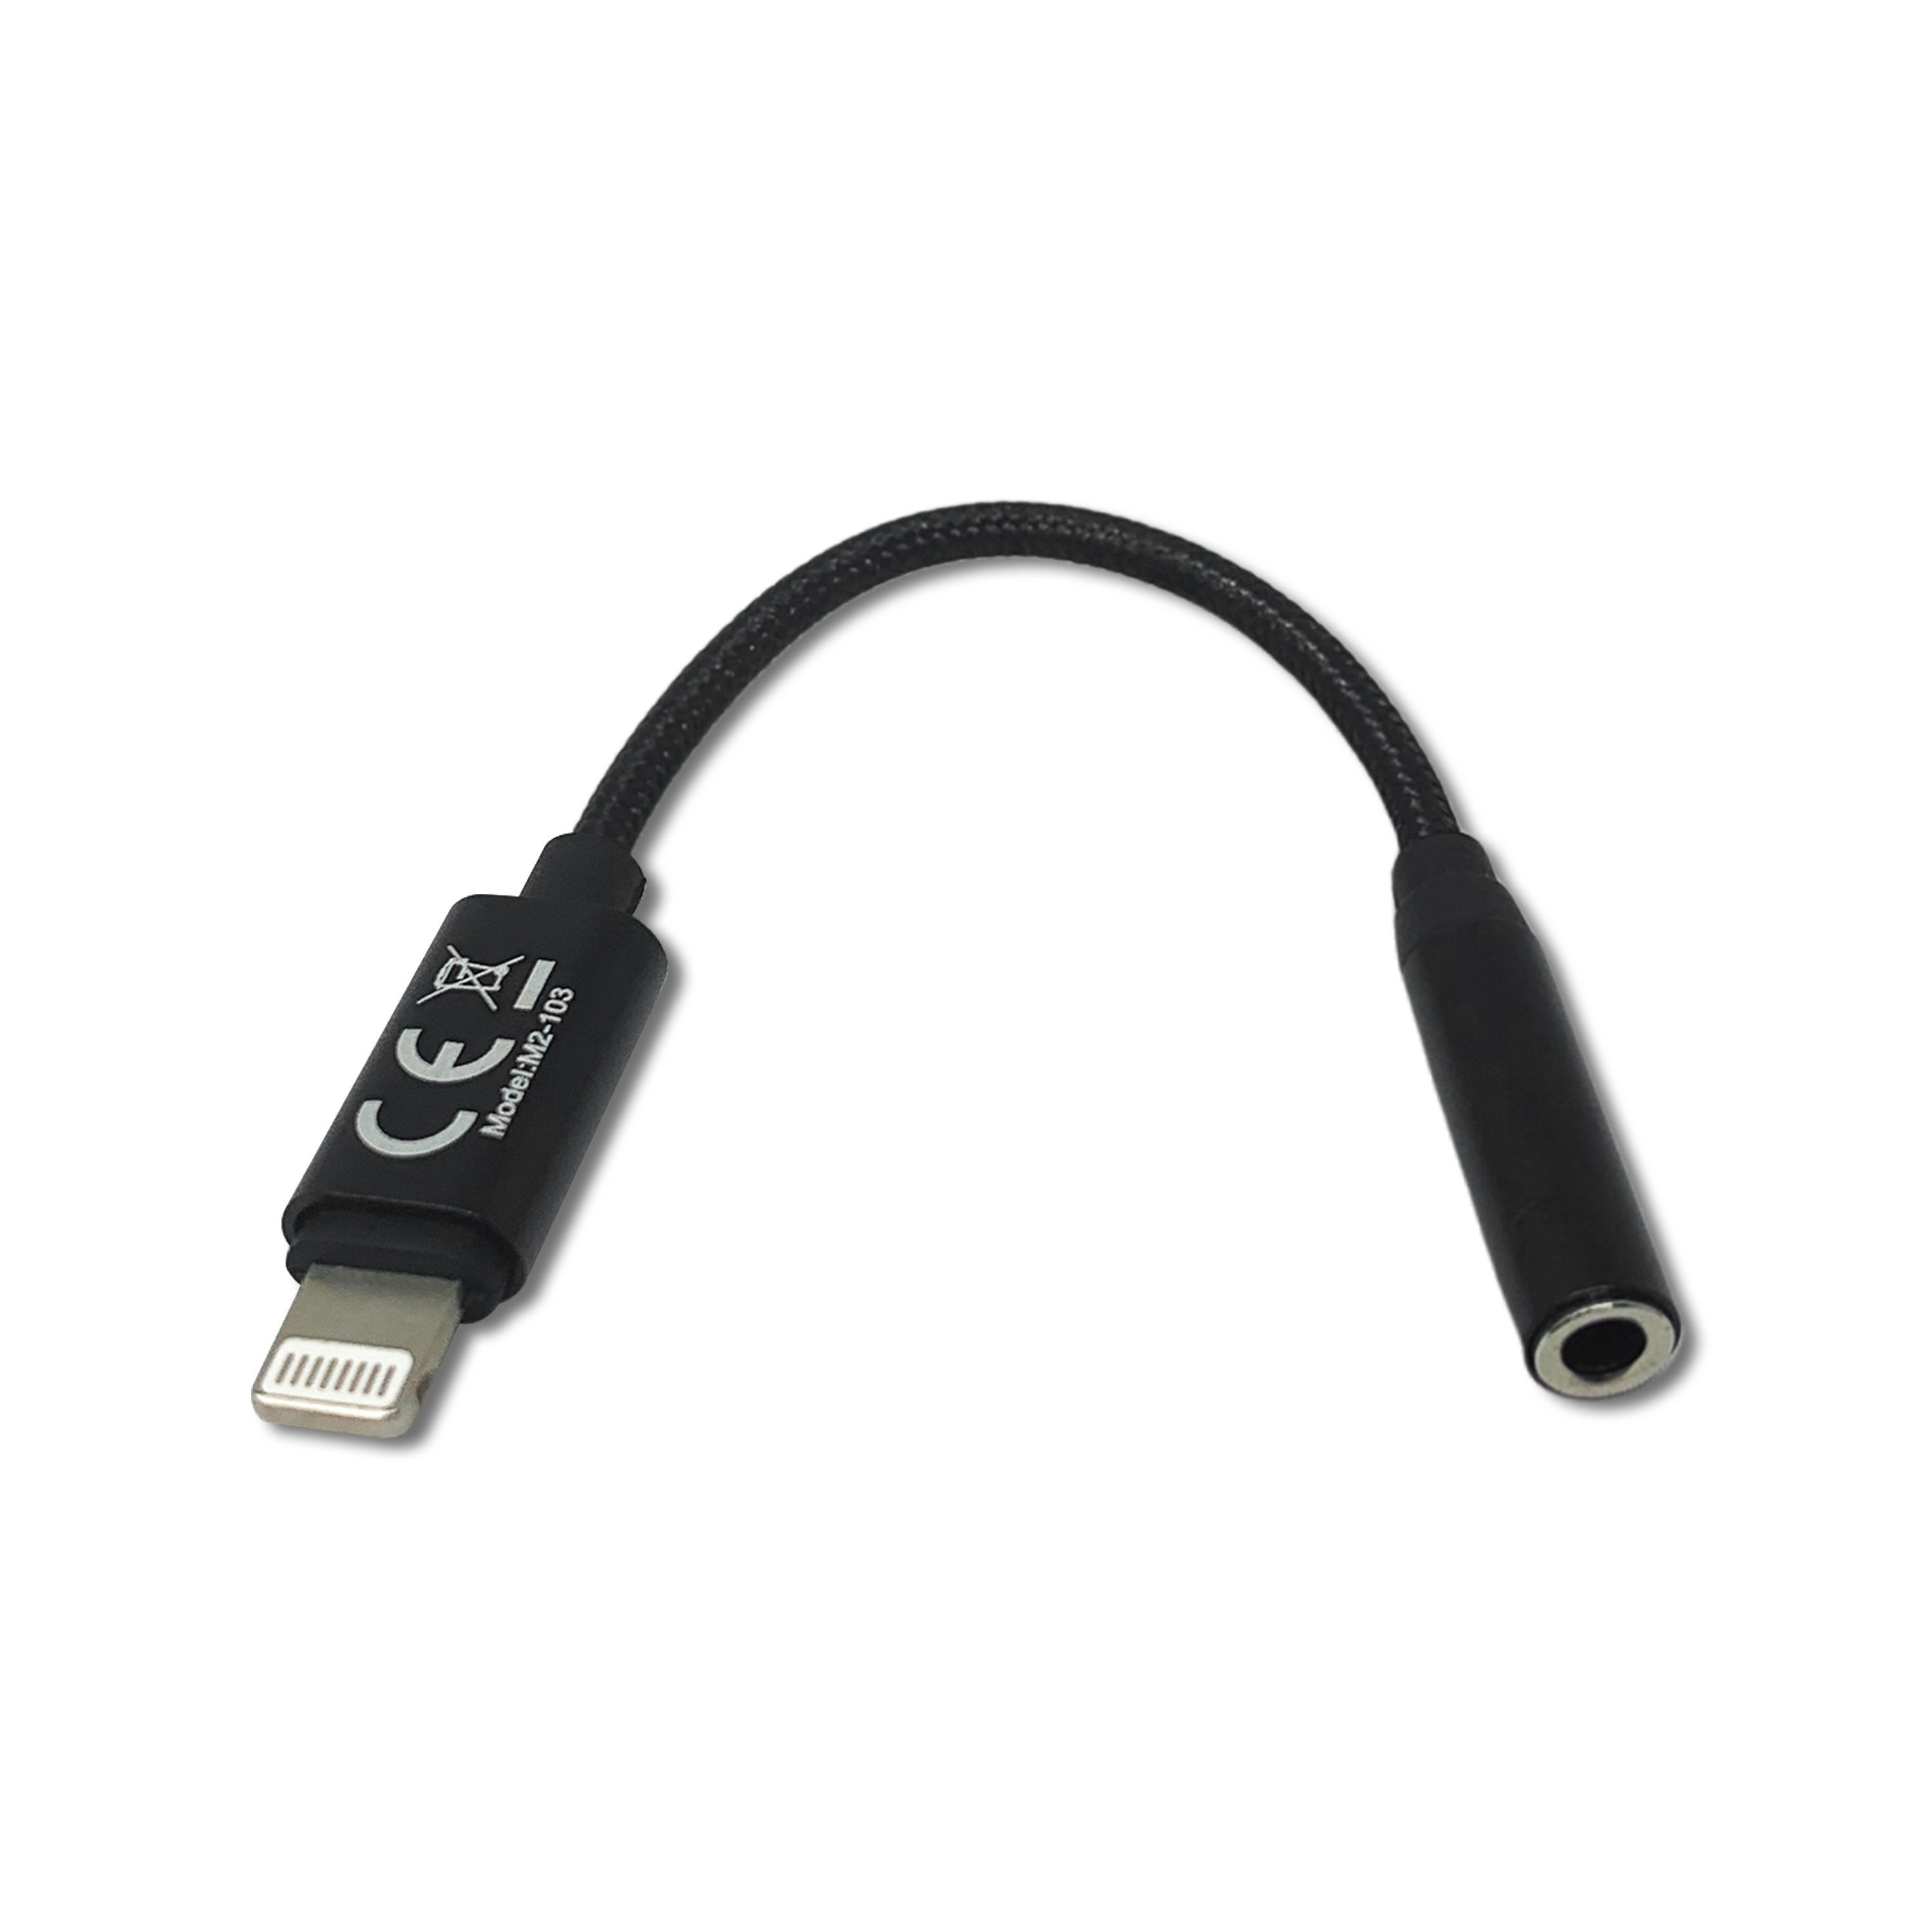 H-basics iPhone Kopfhörer Adapter - iPhone auf 3.5mm Klinken Anschluss, für  iPhone 6 / 6Plus, 7 / 7+, SE / 8 / 8Plus, 11 / 11Pro / 11Pro MAX, 12 / 12  Pro / 12 Pro Max/mini iPad Adapter